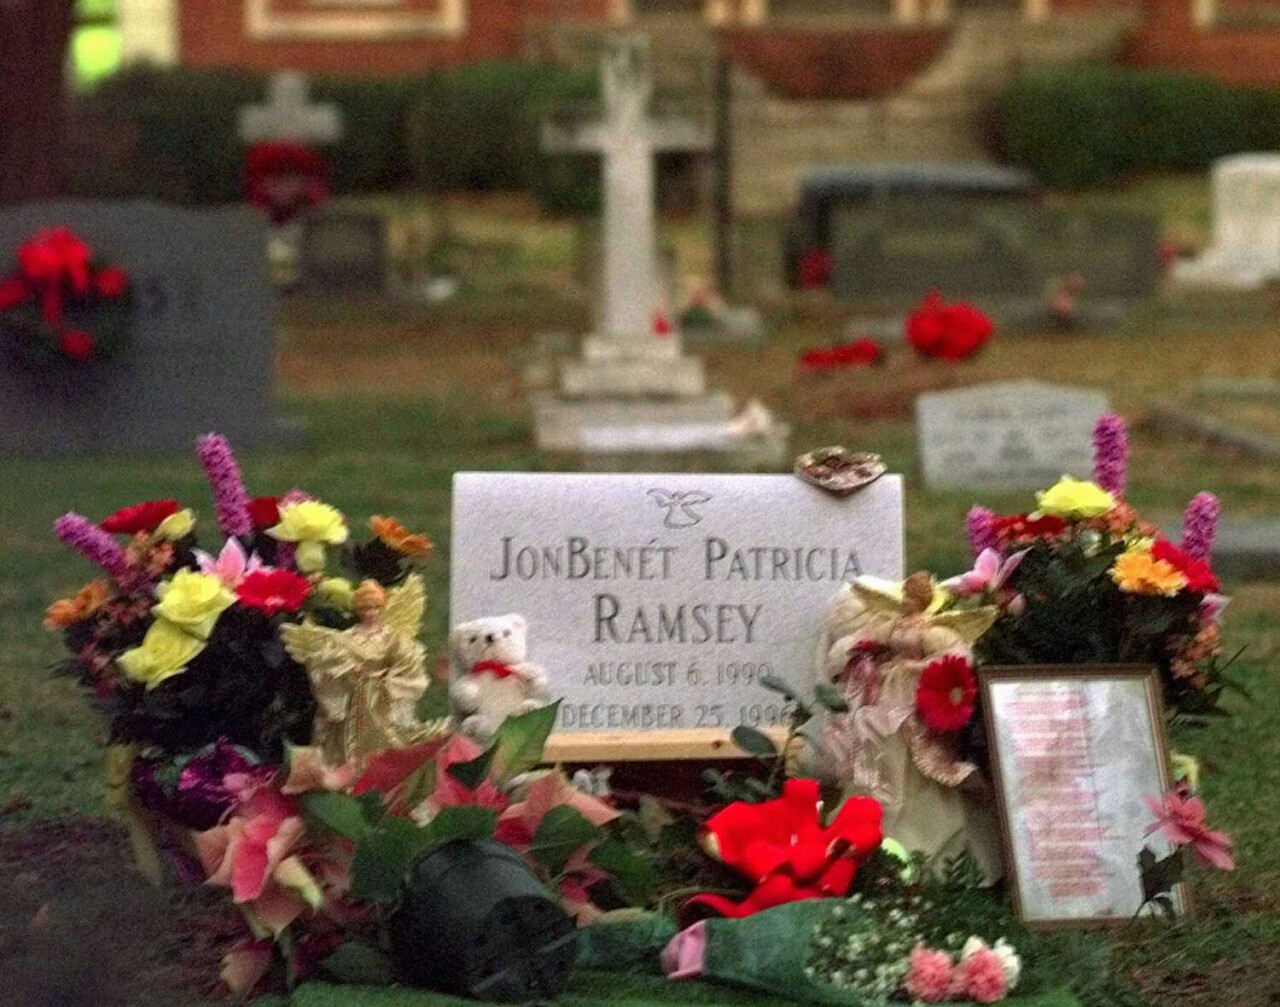 [IMAGE] Why the JonBenét Ramsey murder case still captivates the nation